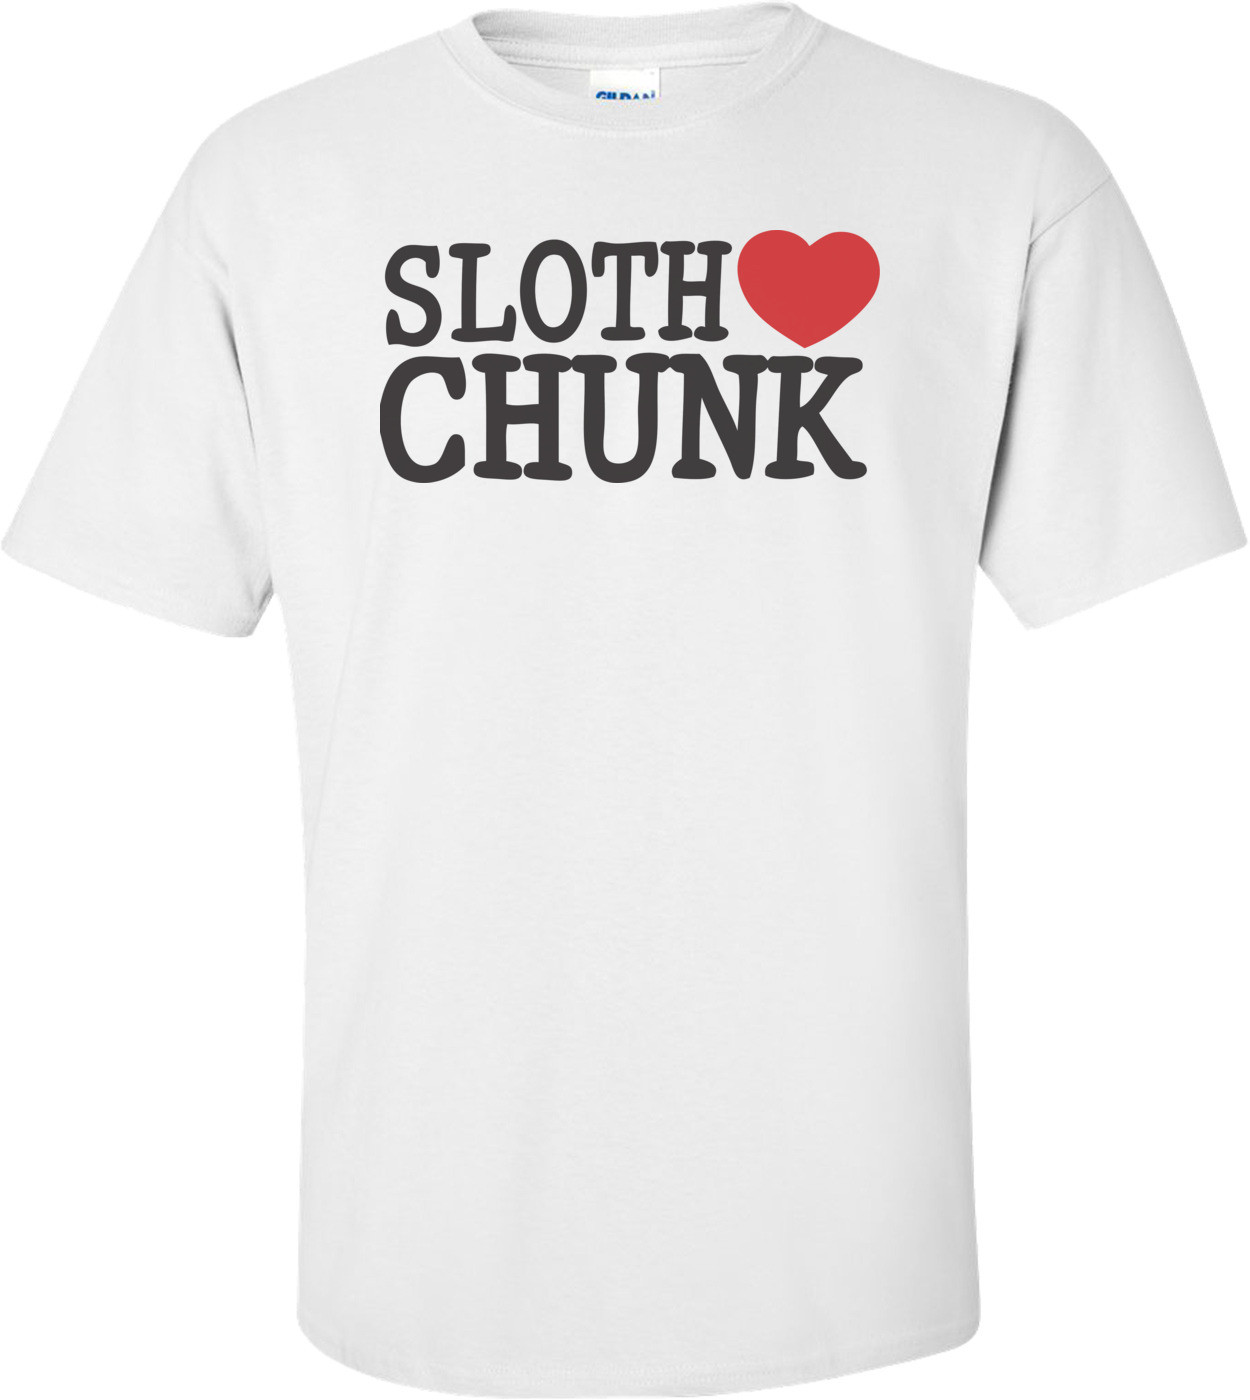 Sloth Love Chunk - Goonies